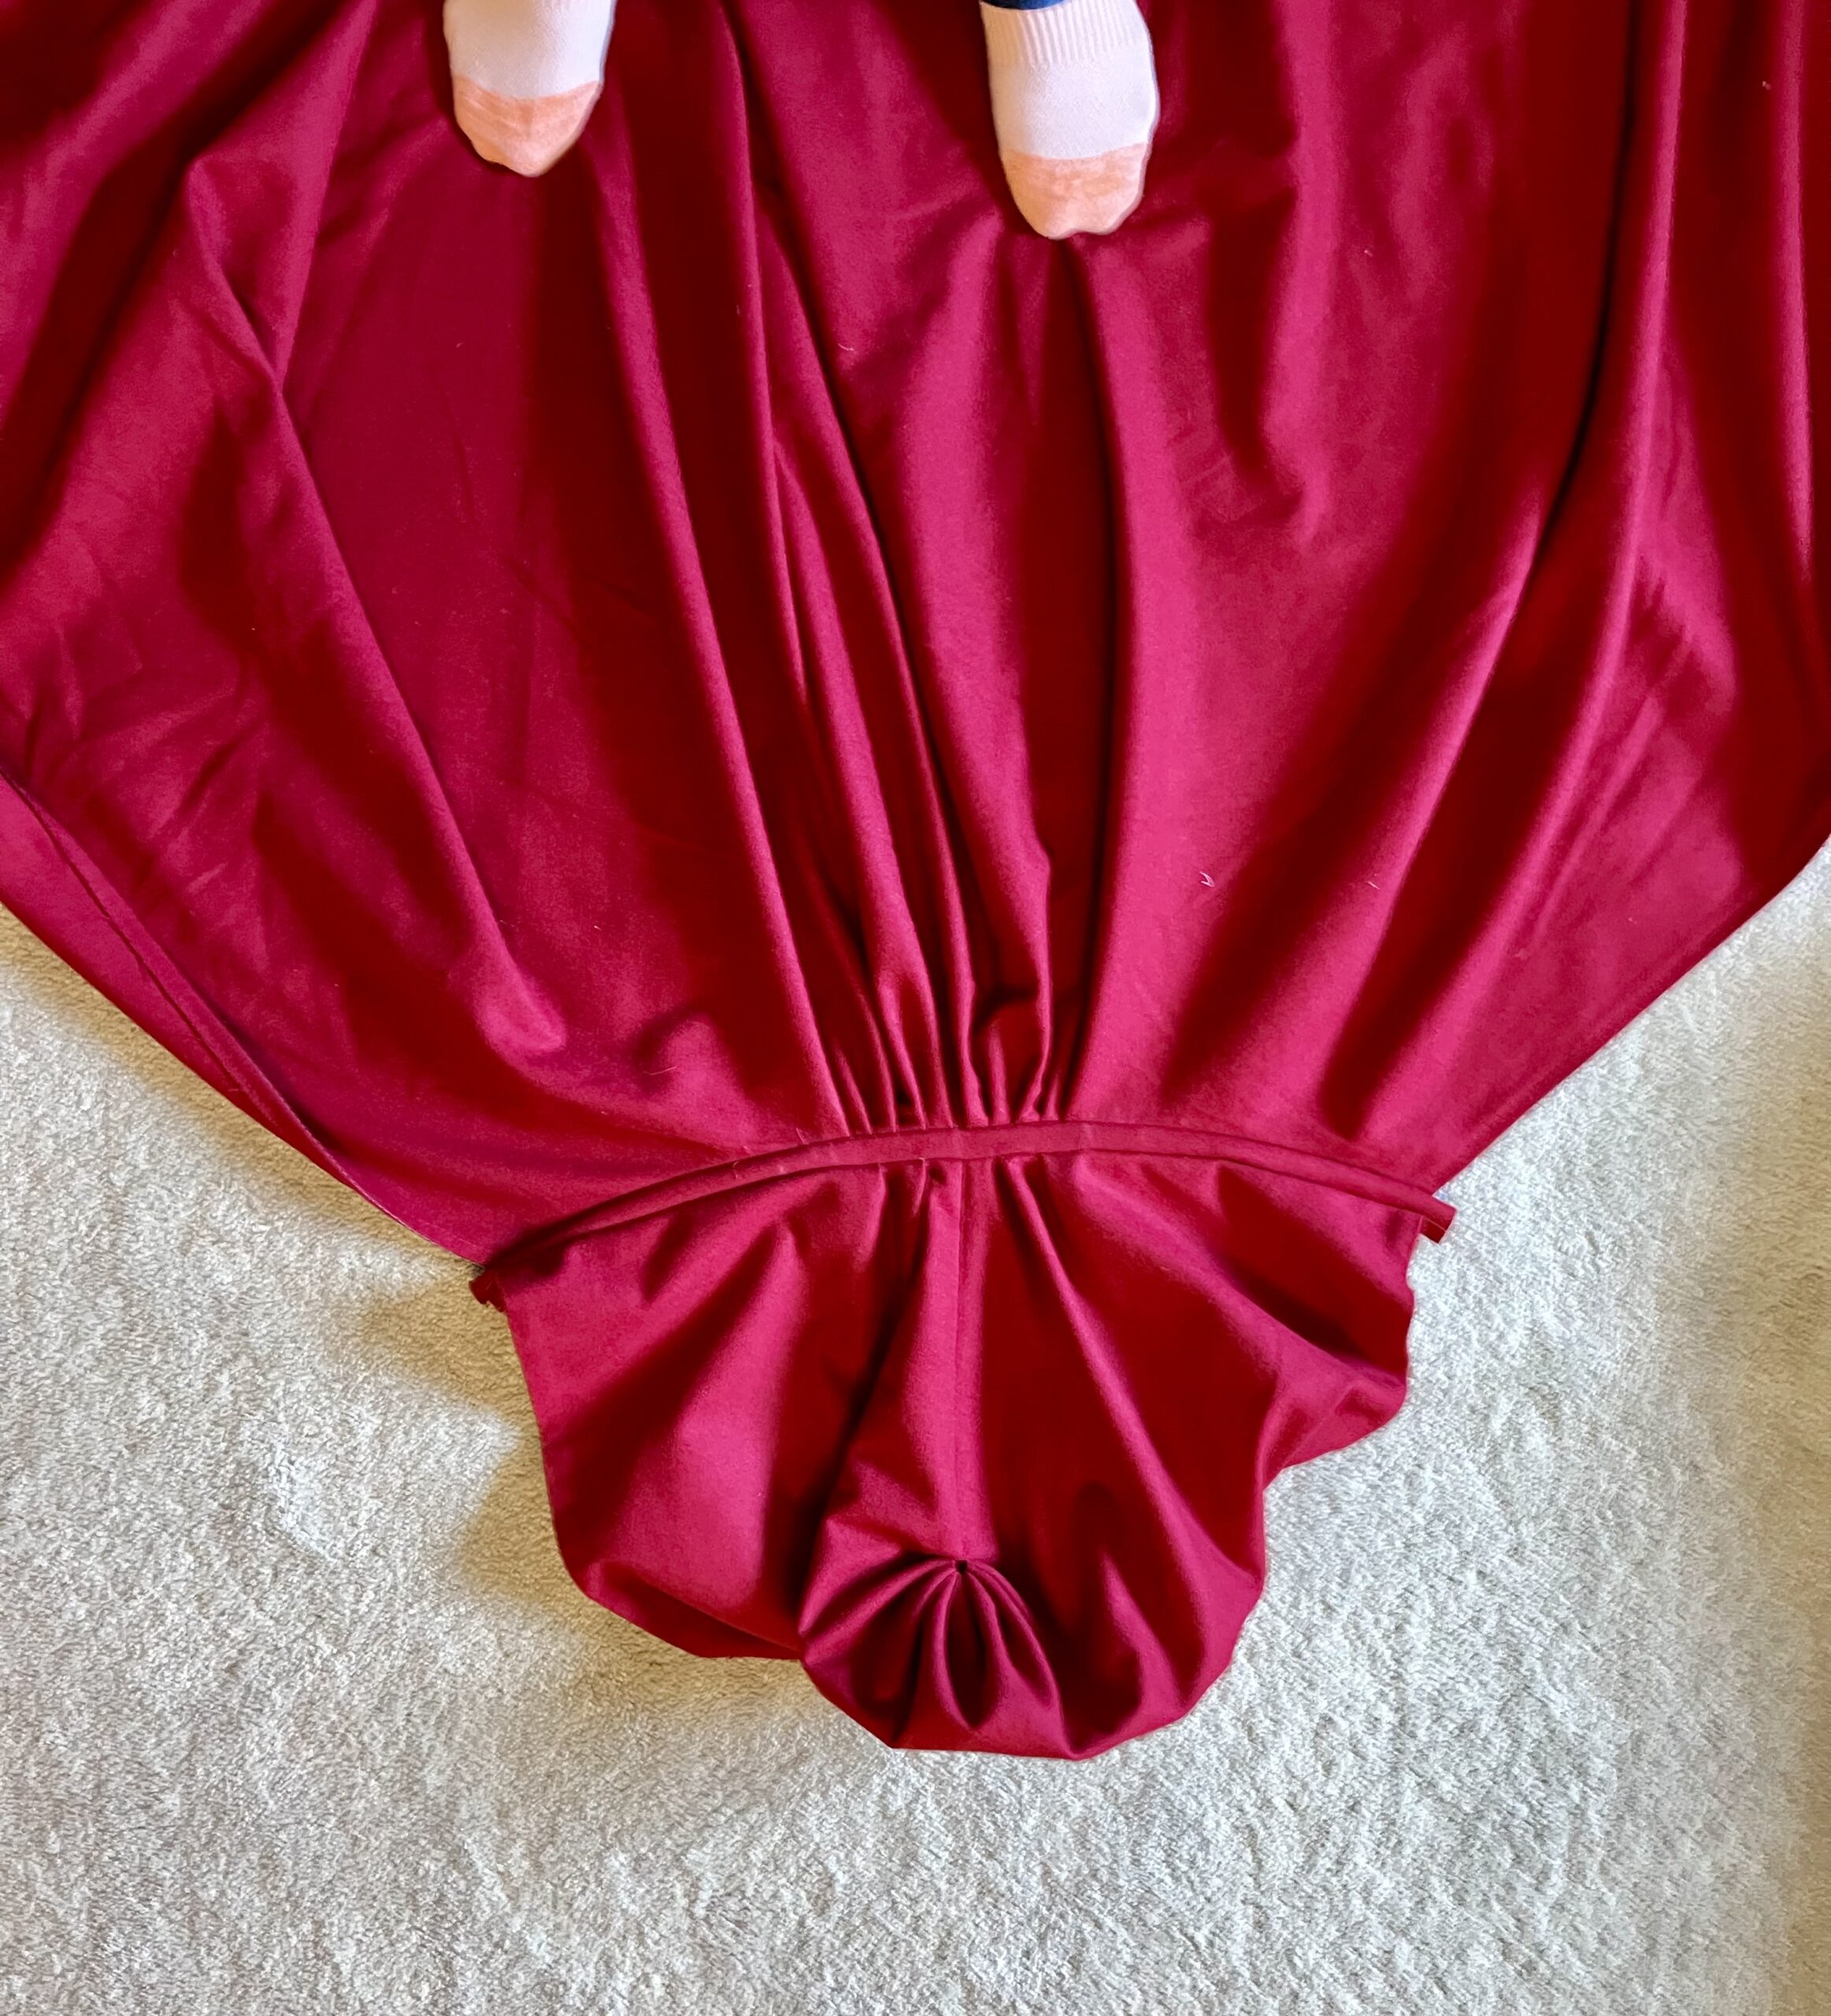 A red Pacific Northwestern 1790s Cardinal Cloak lies on a carpet